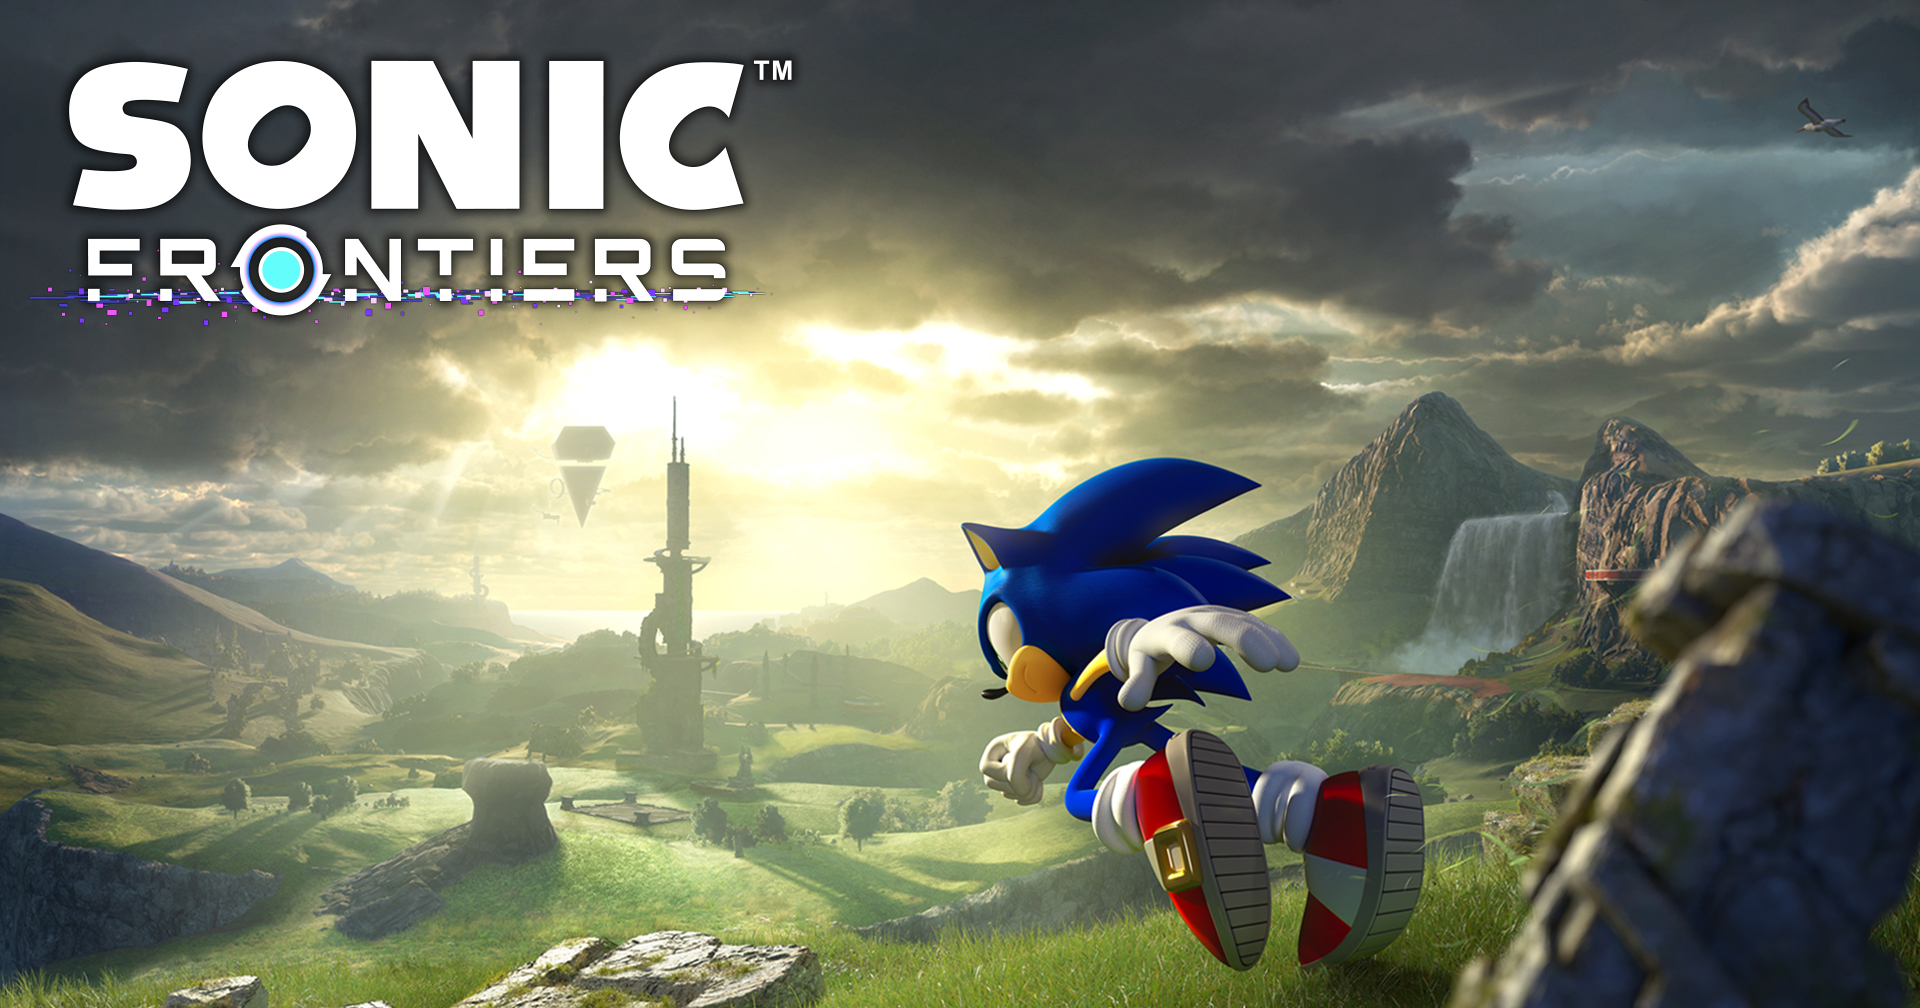 Sonic Frontiers วางจำหน่ายแล้ววันนี้!